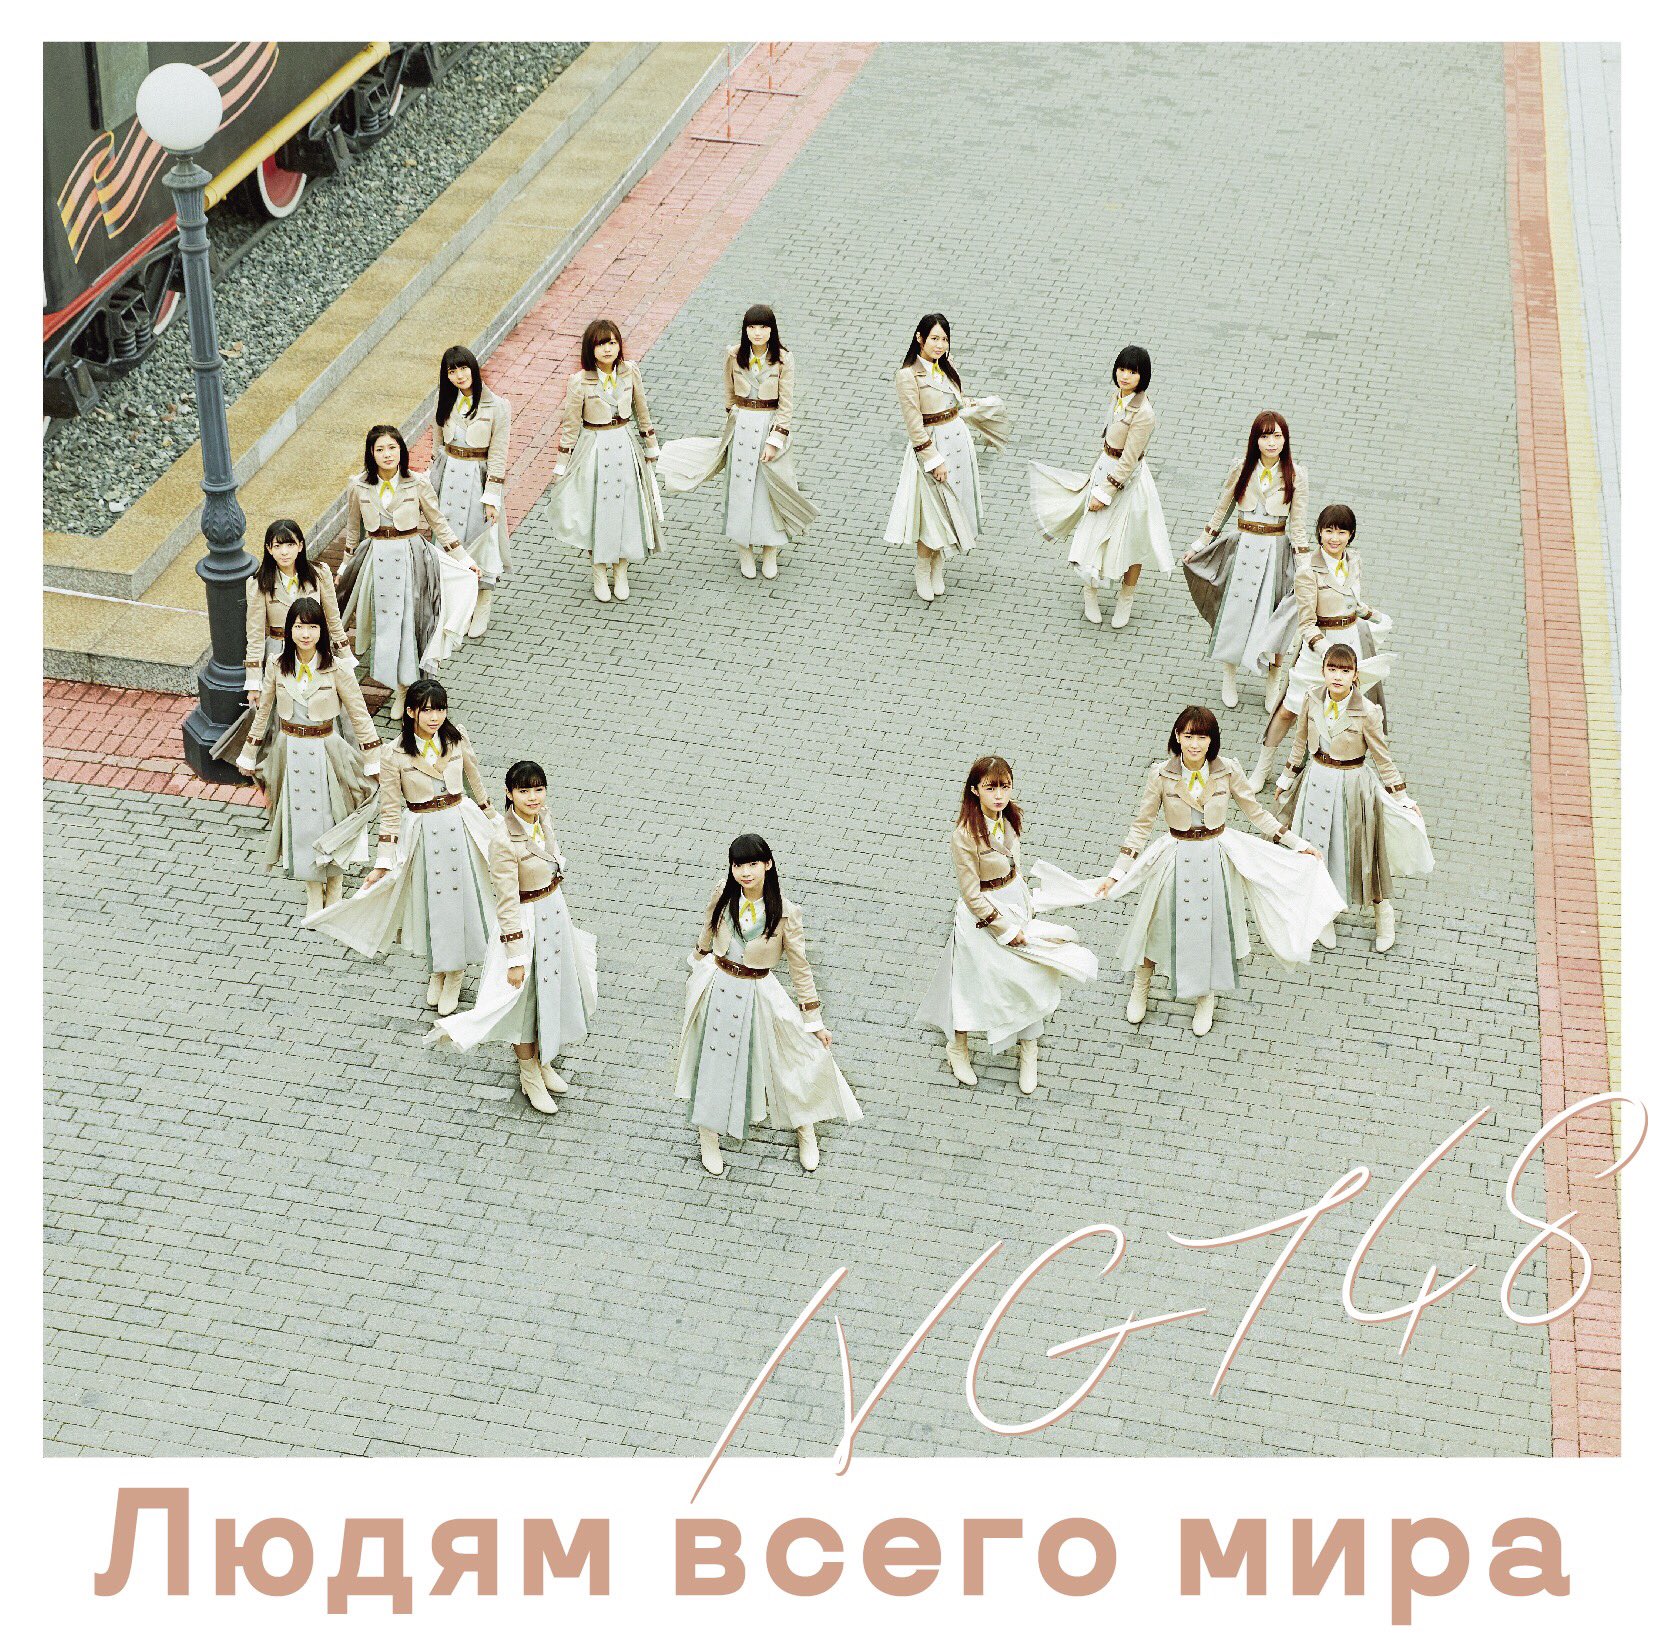 NGT48 4th single